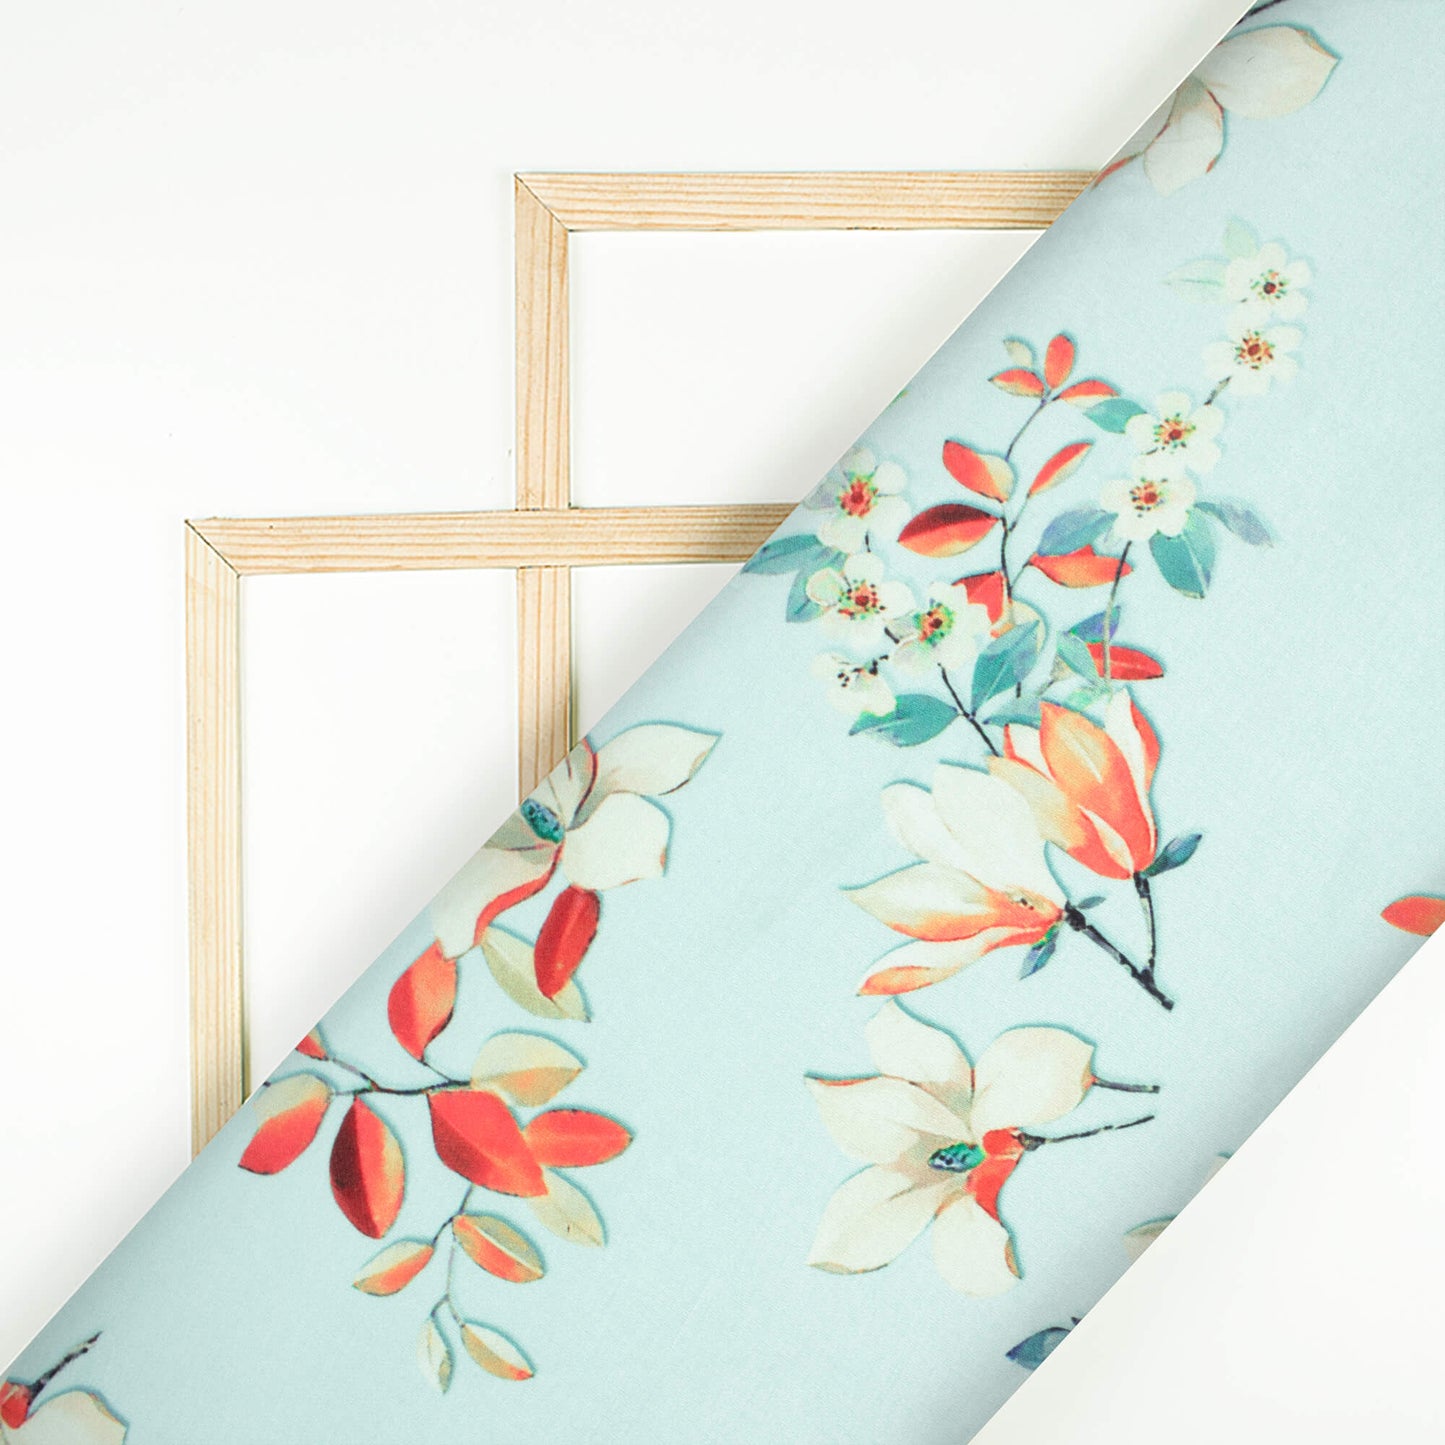 Electric Blue And Orange Floral Pattern Digital Print Premium Lush Satin Fabric